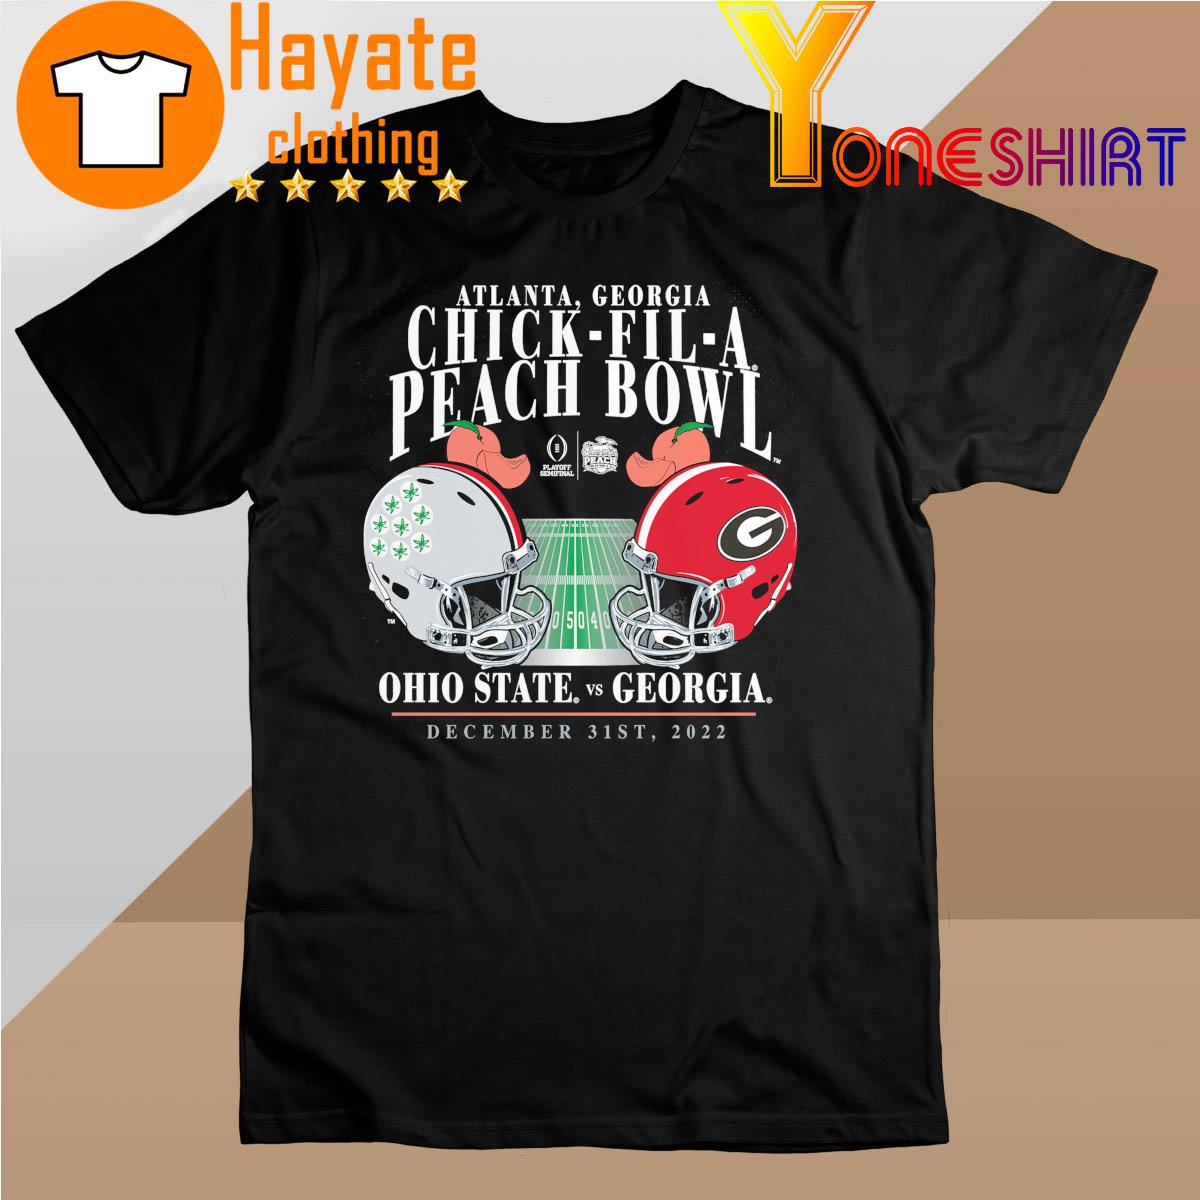 Georgia Bulldogs vs Ohio State Buckeyes College Football Playoff 2022 Peach Bowl Matchup Old School shirt